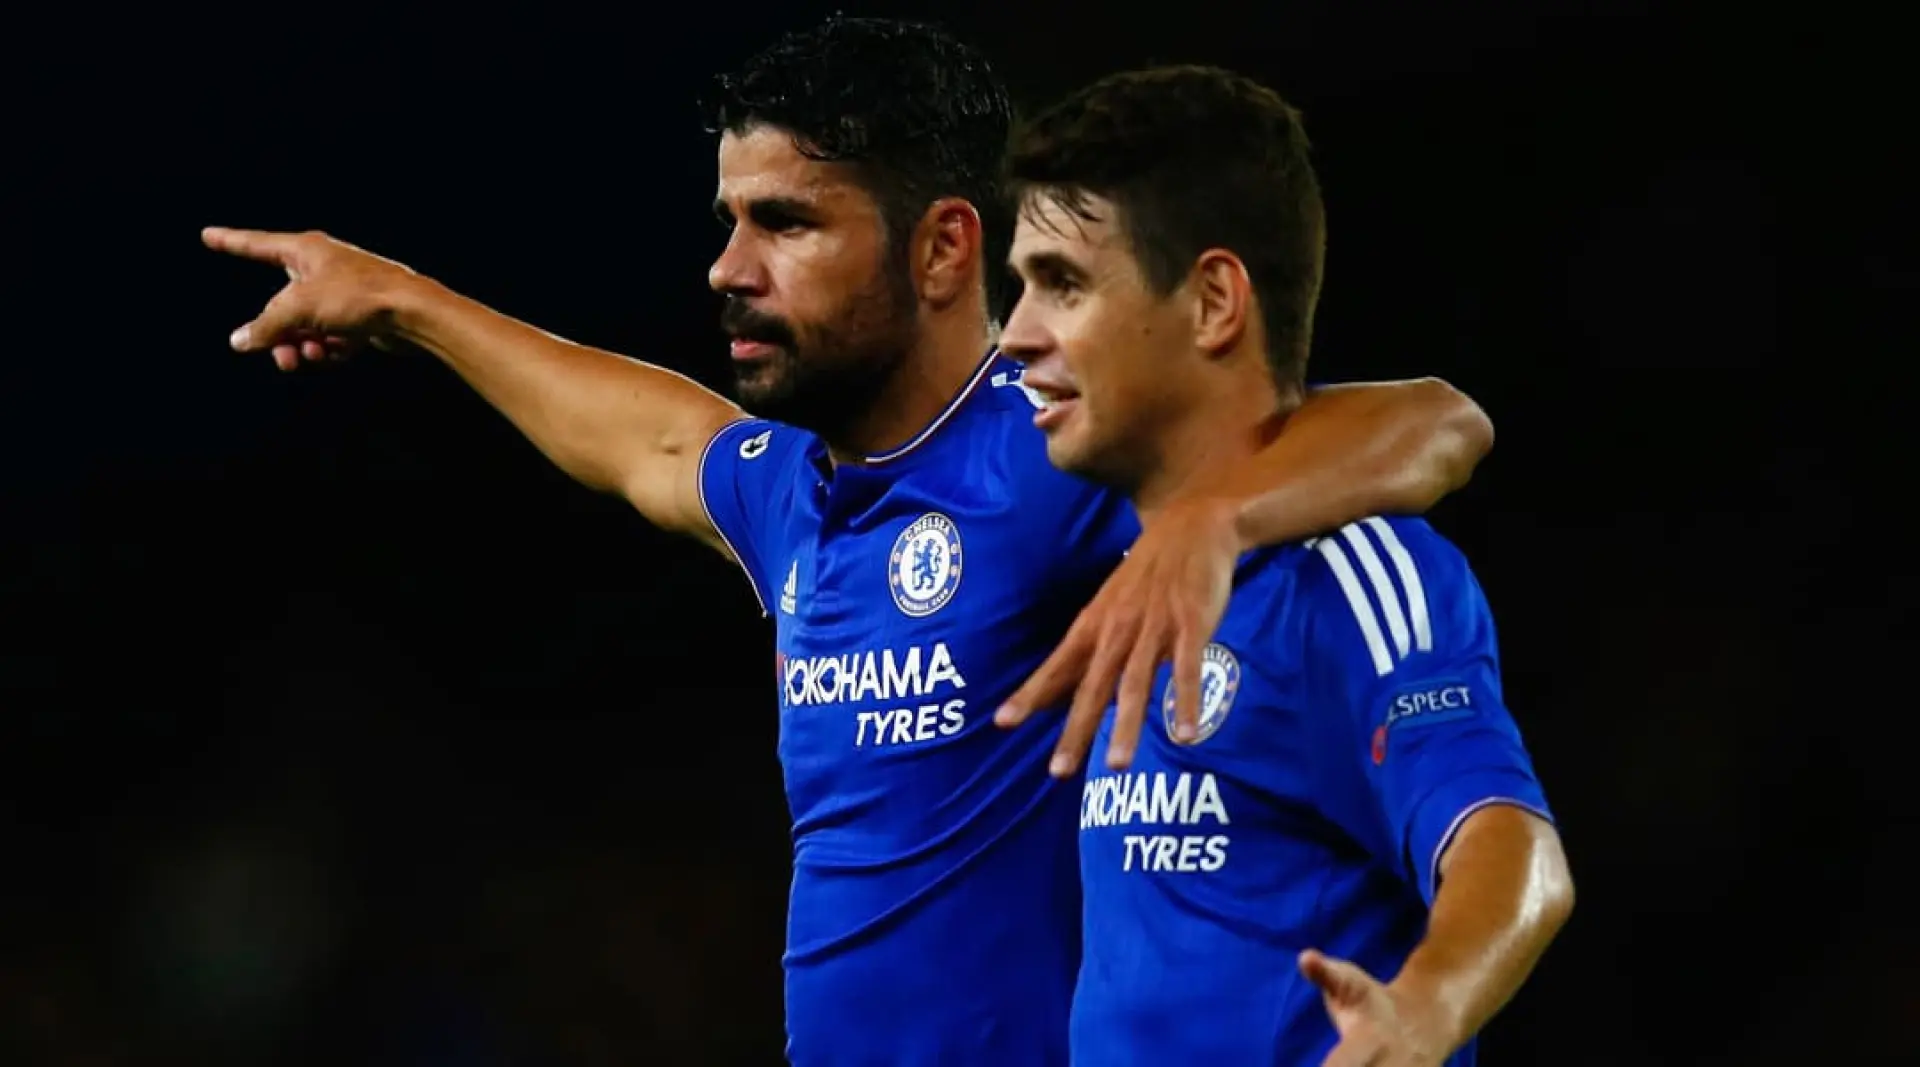 Diego Costa and Oscar celebrate for Chelsea against Maccabi Tel Aviv